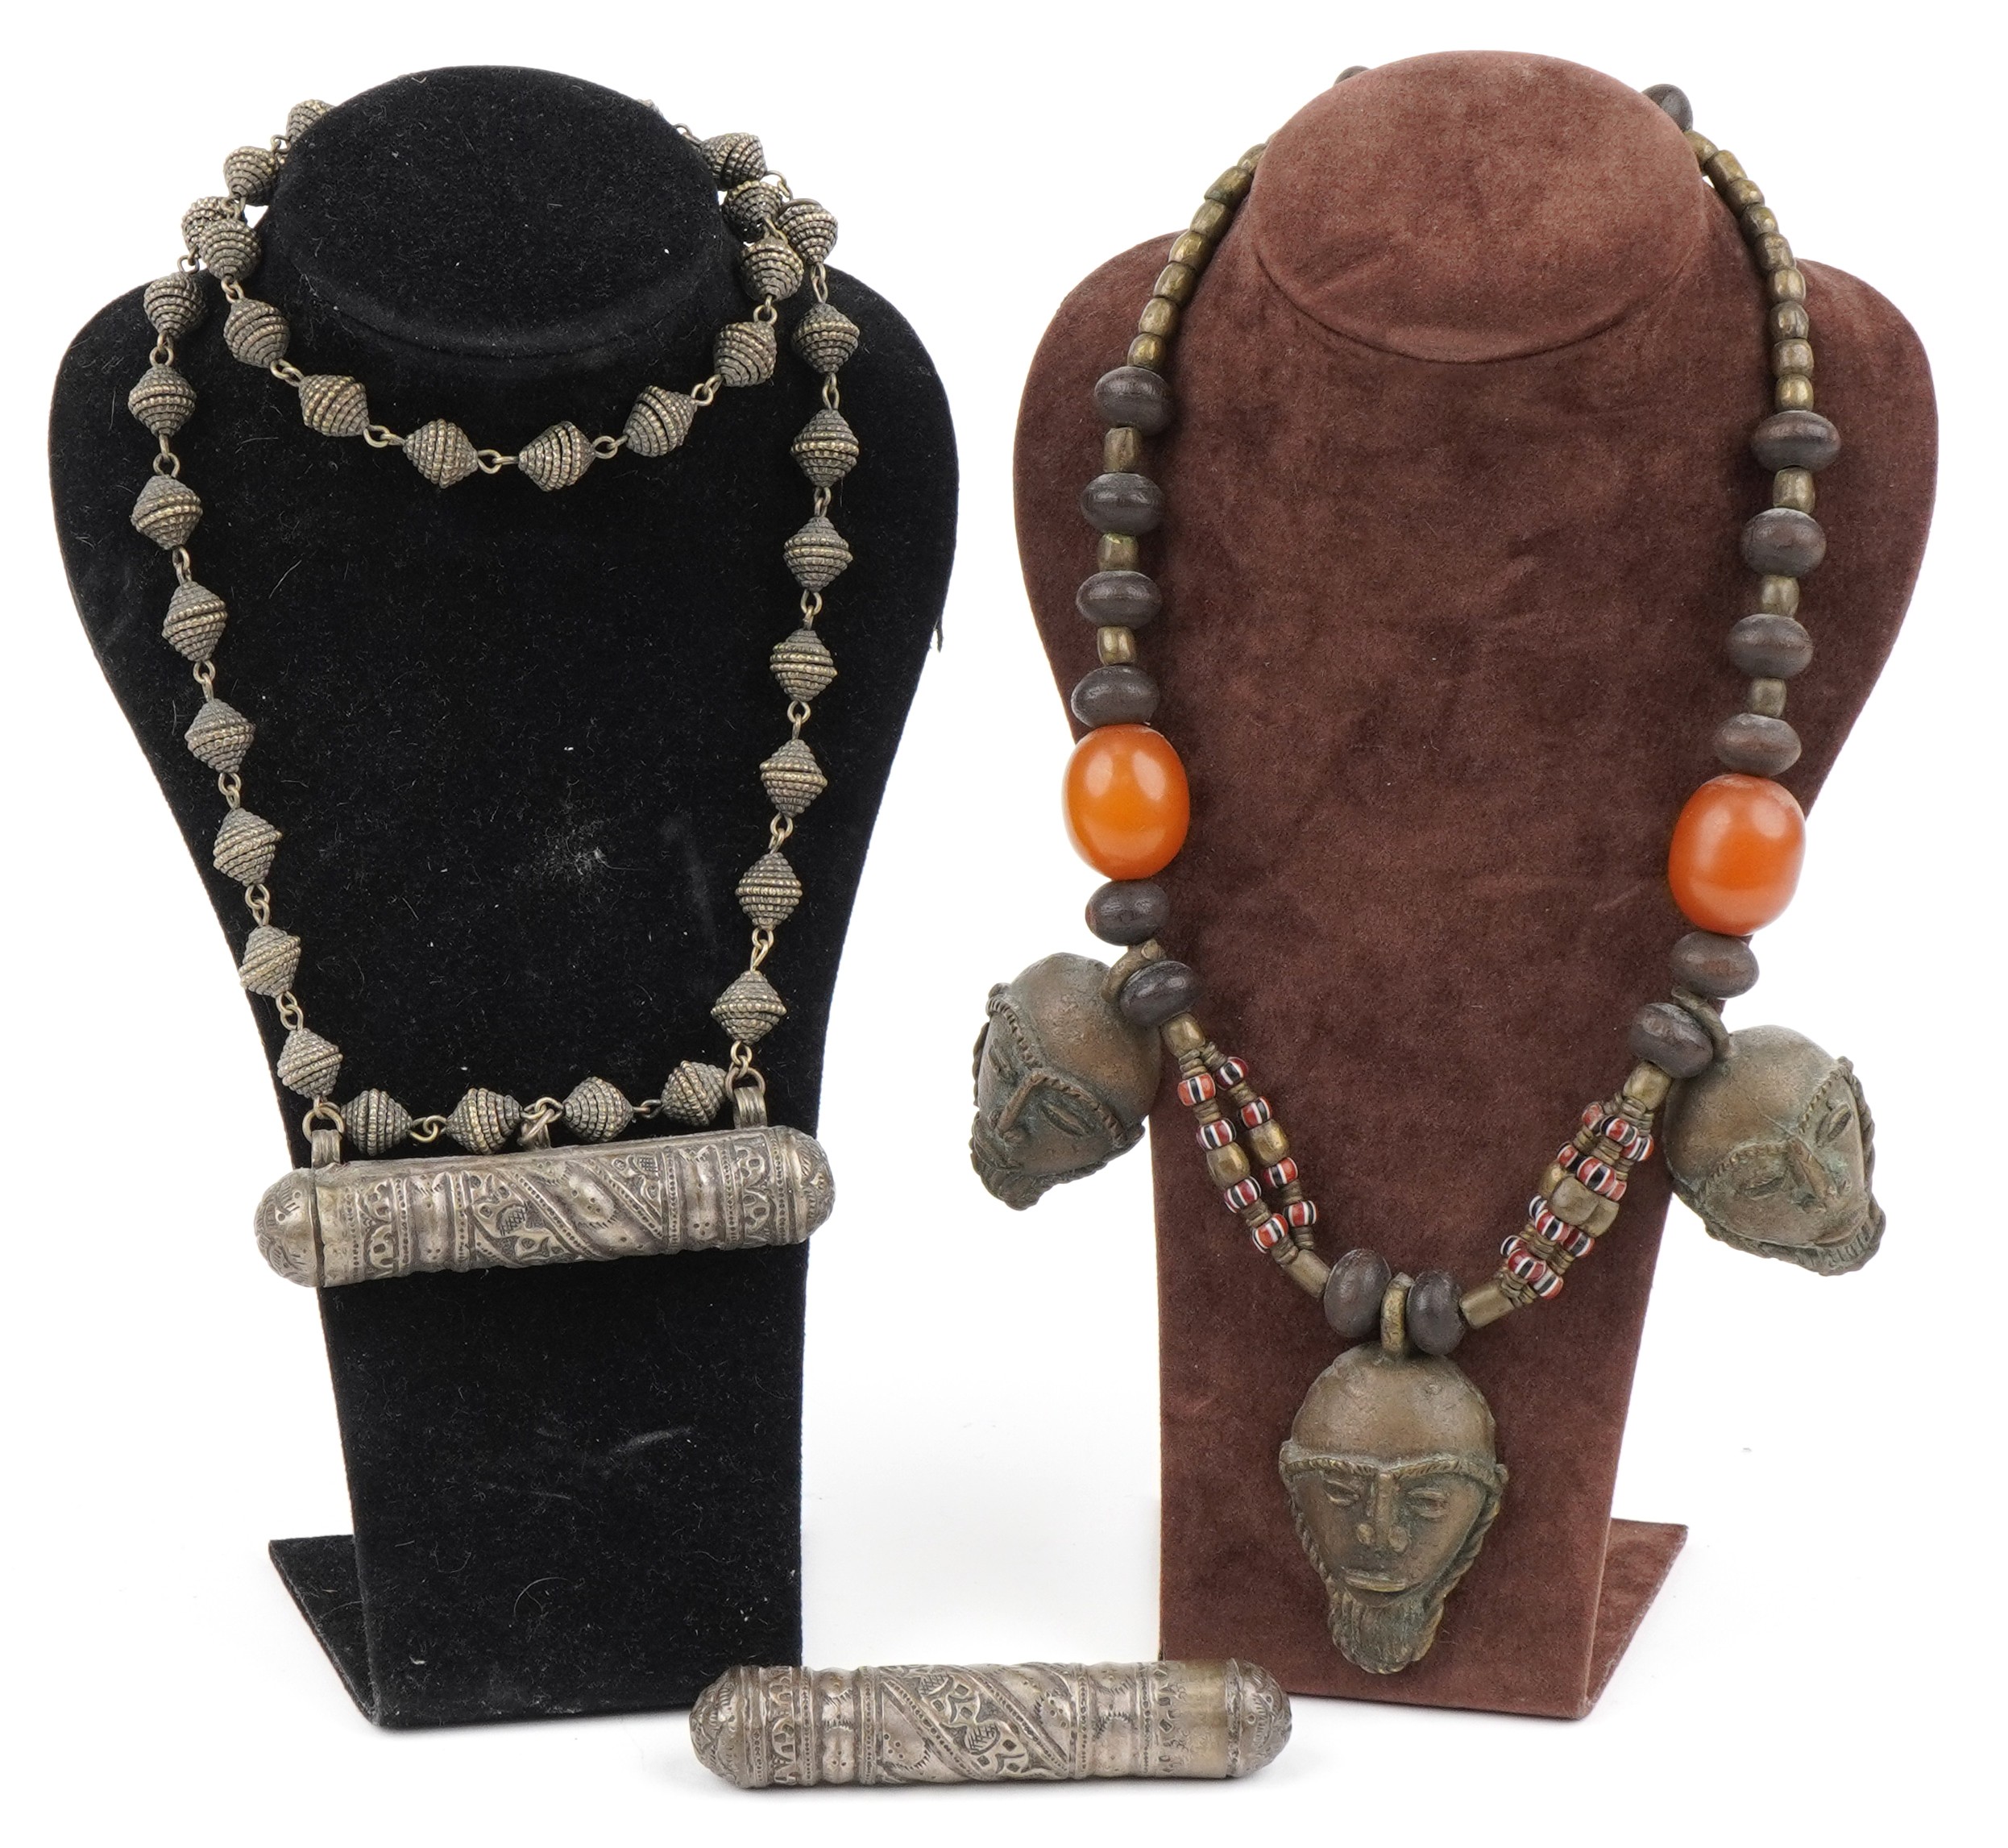 Tribal interest Yemeni Bedoun prayer box necklace with additional prayer box and a hardwood and